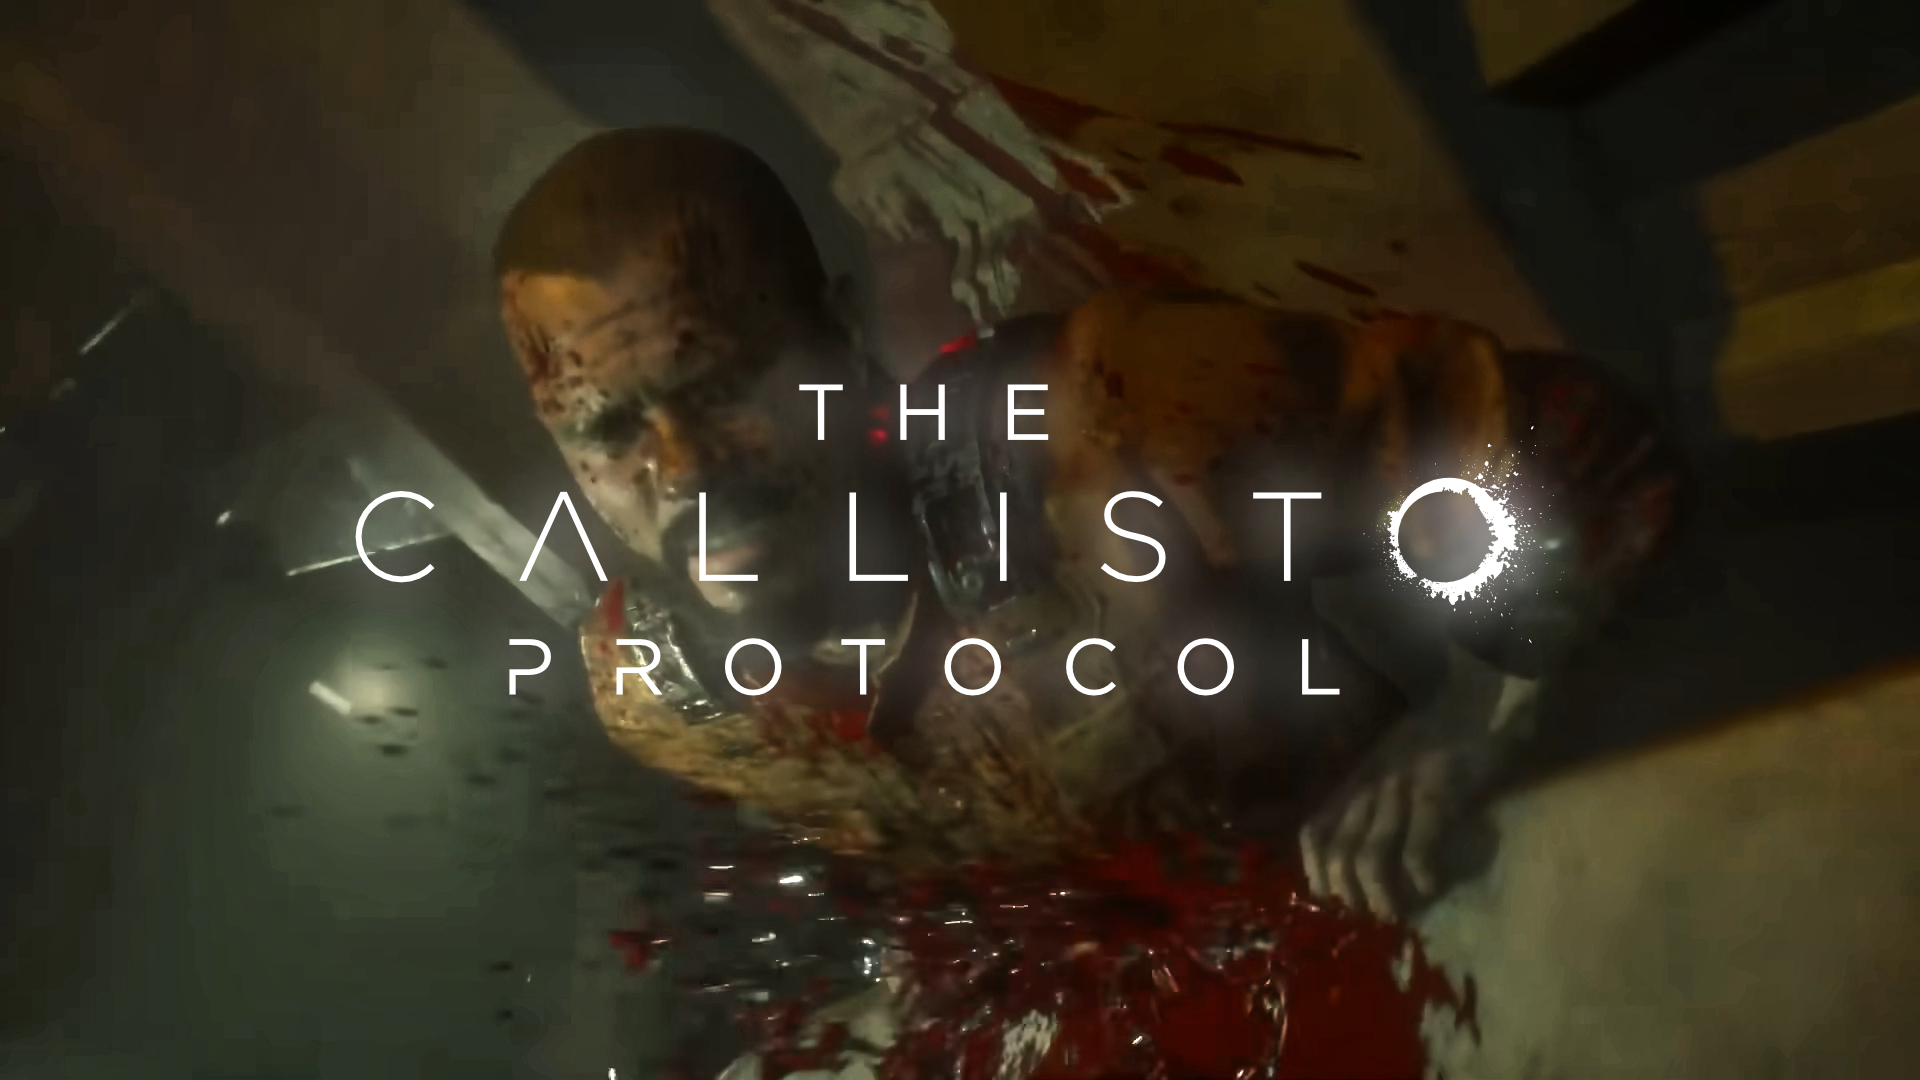 Buy The Callisto Protocol - Season Pass